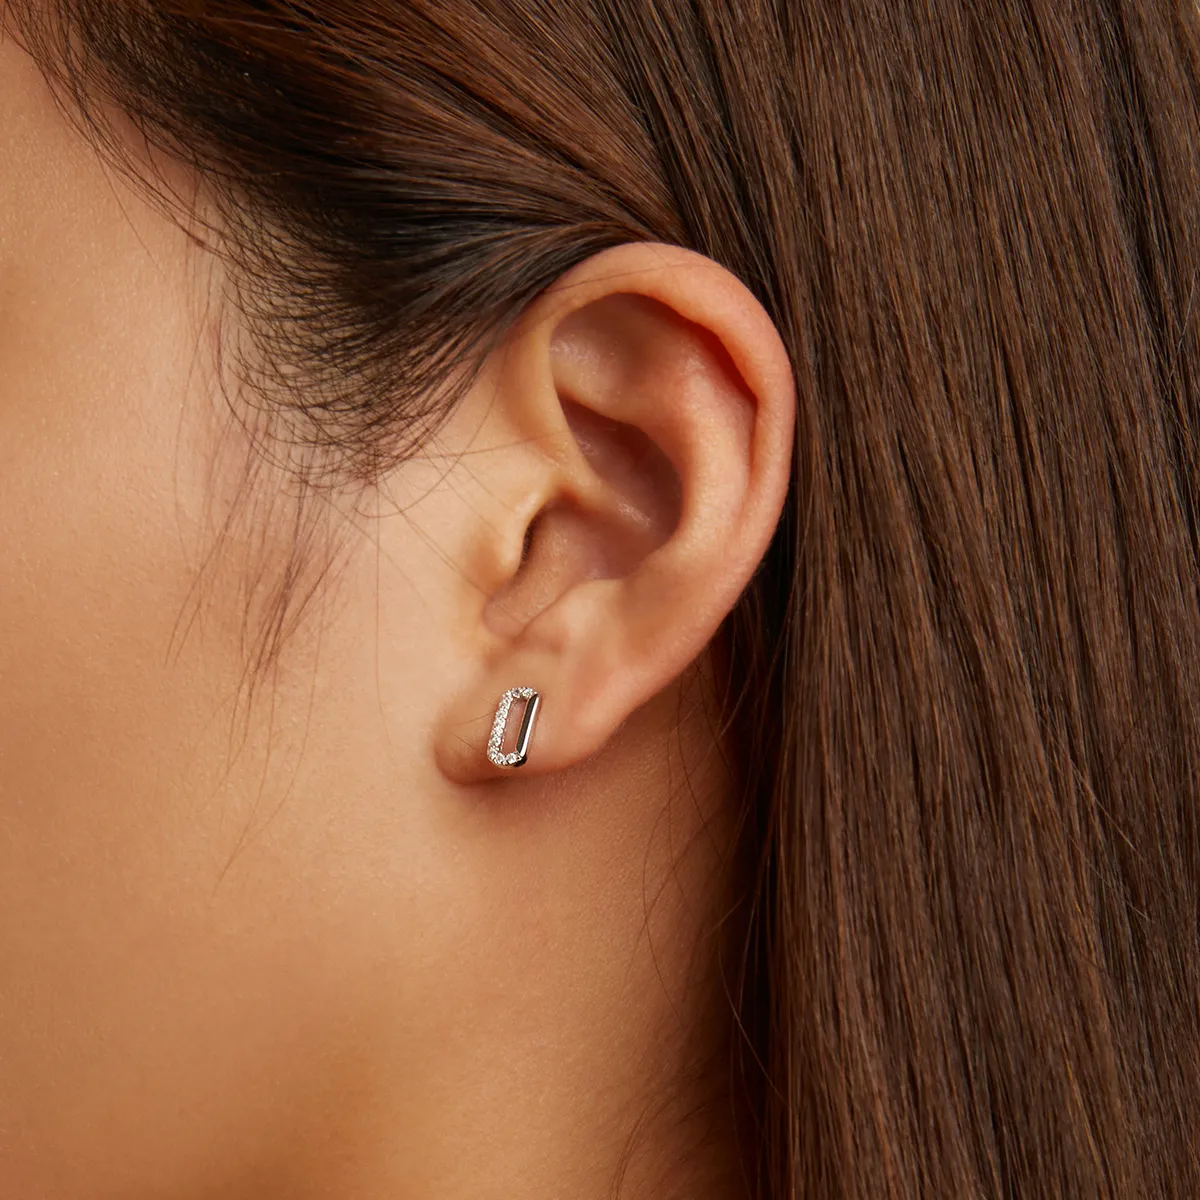 Pandora Style Mini Paper Clip Stud Earrings - SCE1330